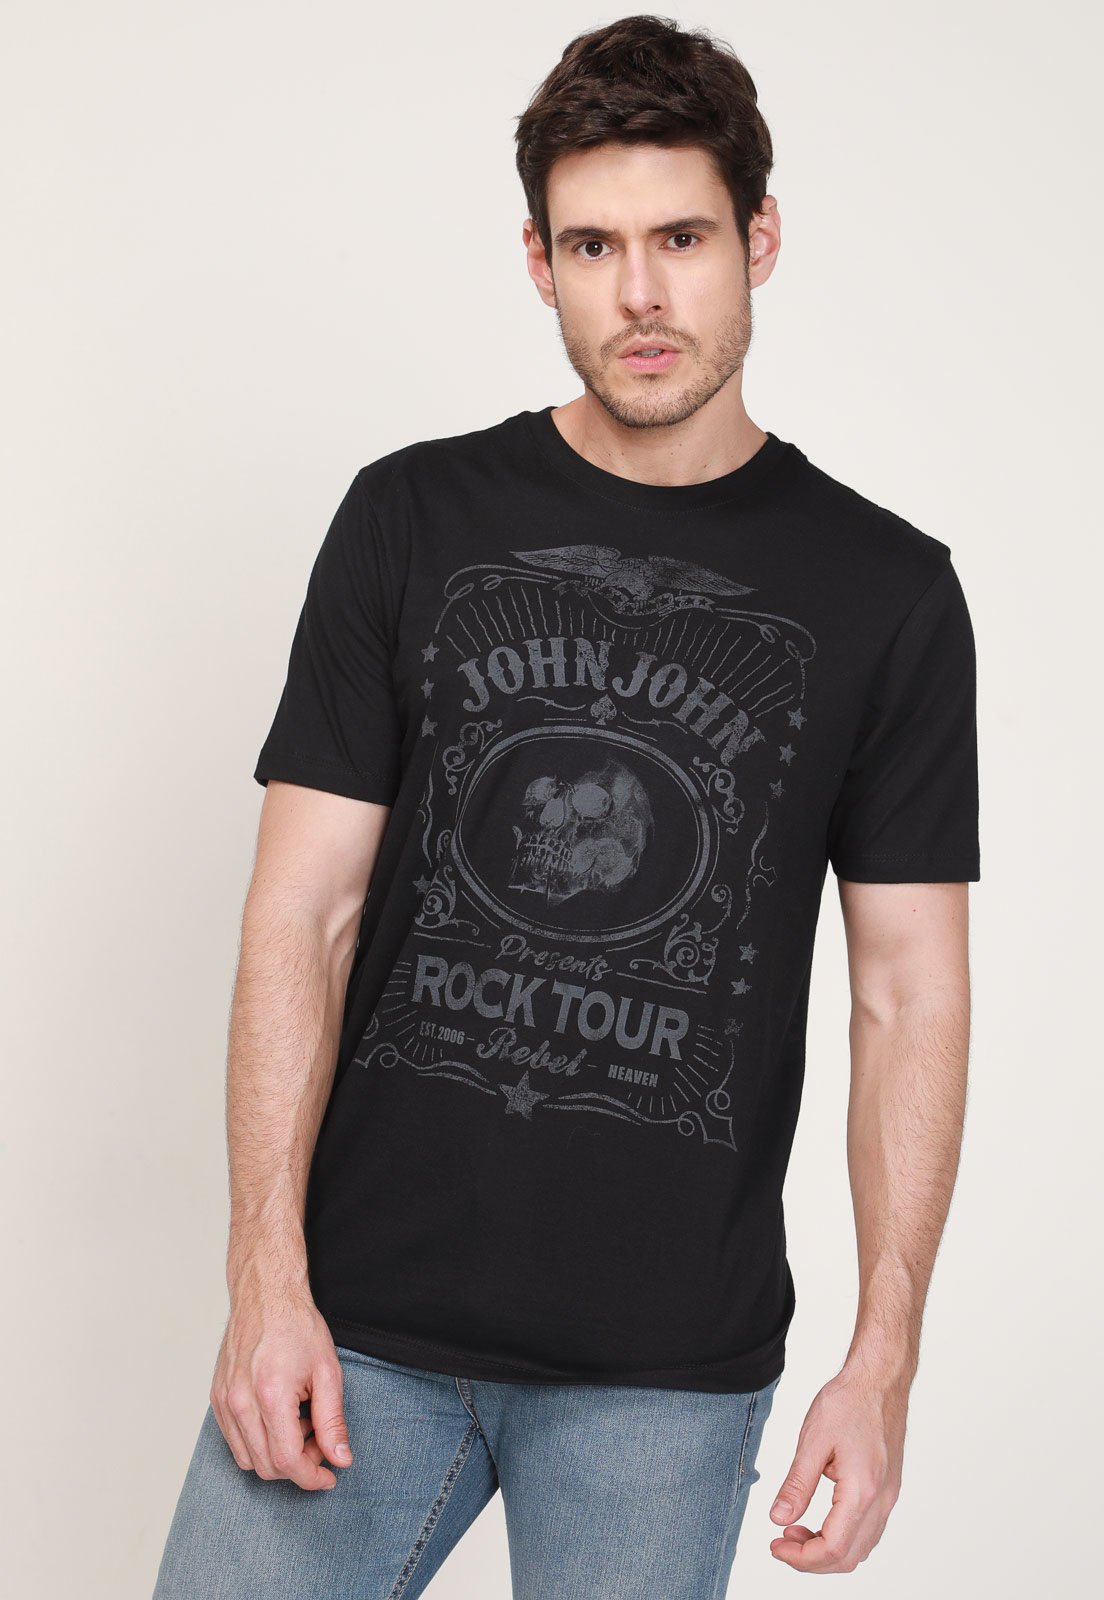 Camiseta John John Logo Preta - Faz a Boa!